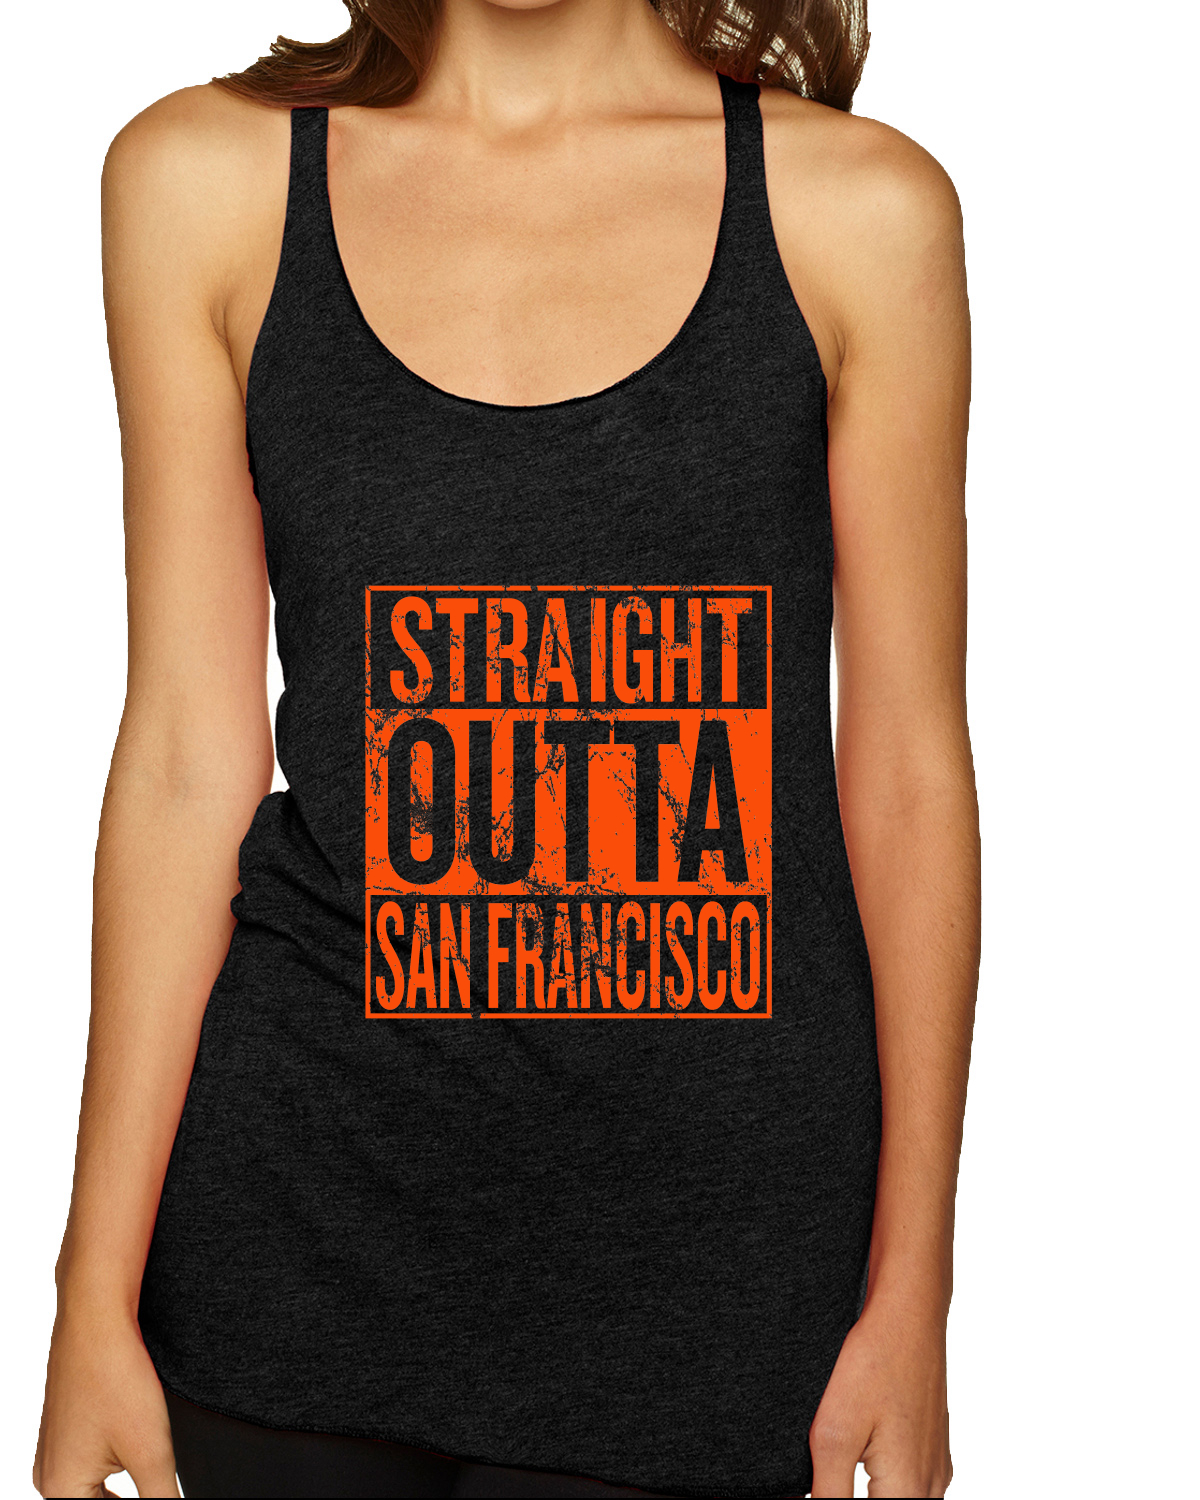 Straight Outta San Francisco SF Fan | Fantasy Baseball Fans | Womens Sports Premium Tri-Blend Racerback Tank Top, Vintage Black, Small - image 1 of 4